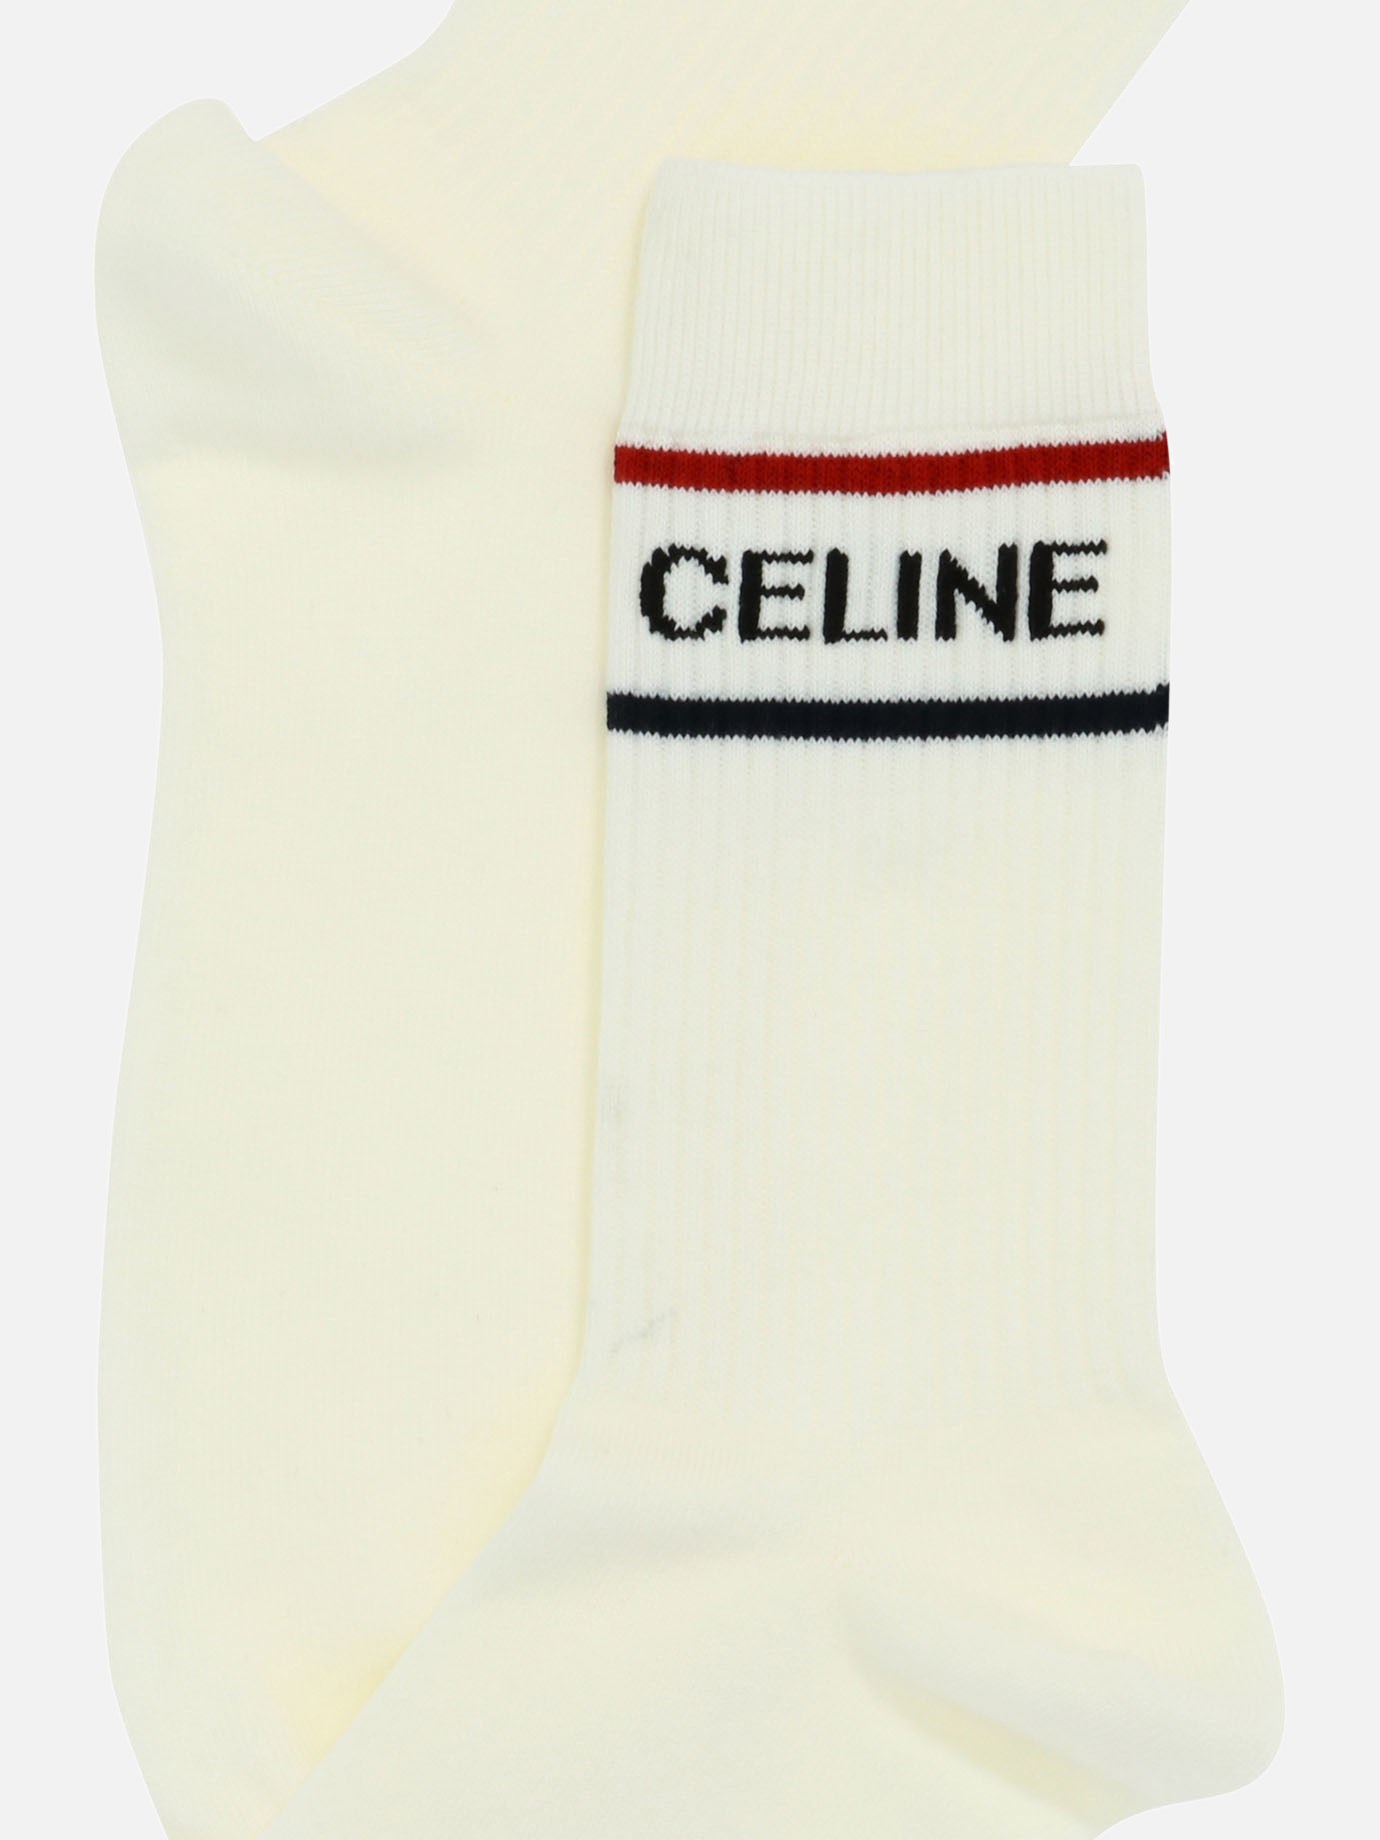  Celine  socks by Celine